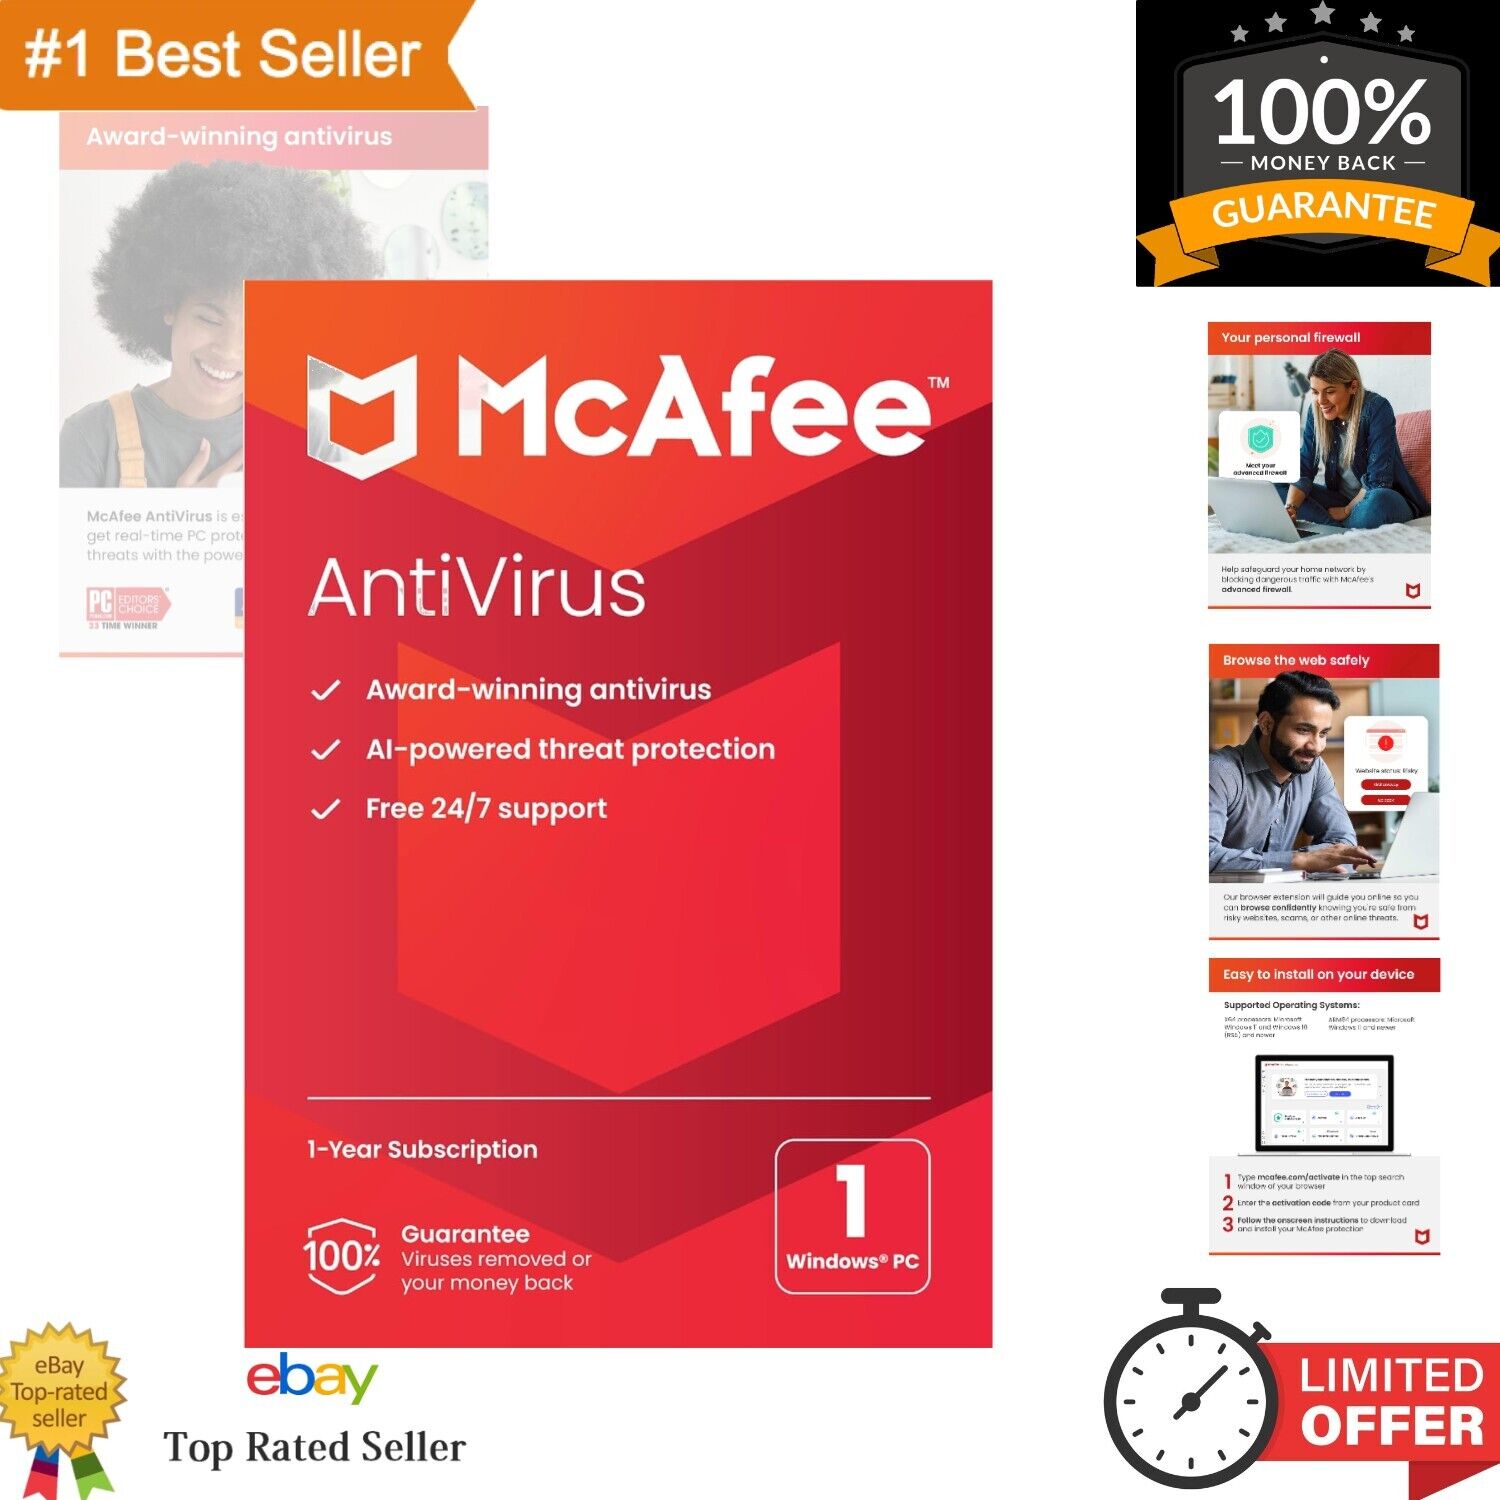 Award-Winning Antivirus Protection & 24/7 Support | Windows Security Software